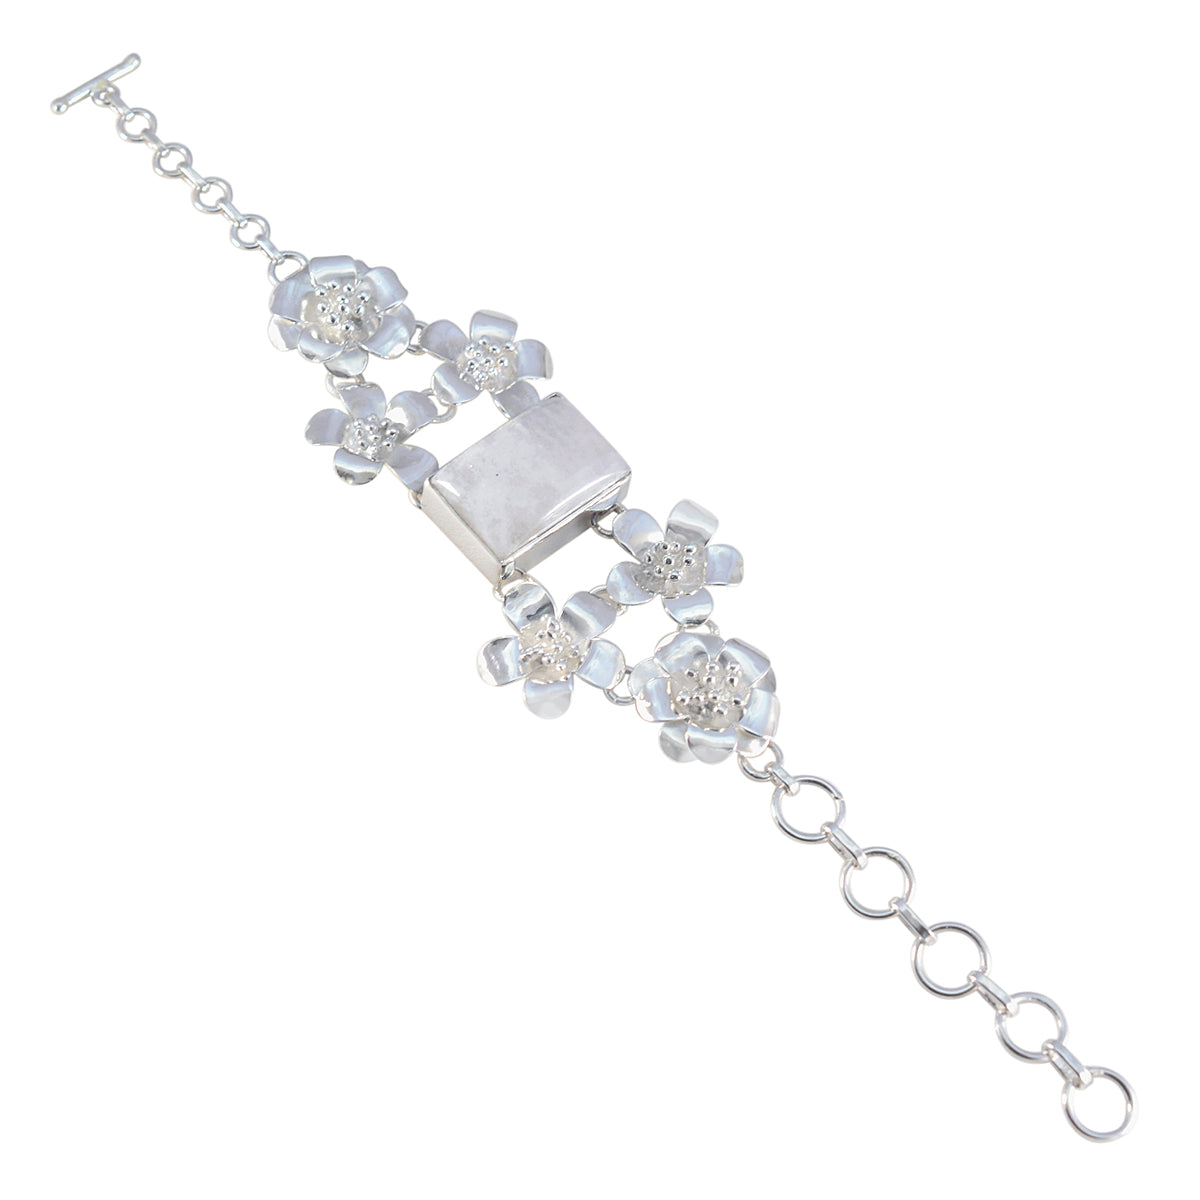 Riyo Perfect 925 Sterling Silver Bracelet For Women Rainbow Moonstone Bracelet Bezel Setting Bracelet with Toggle Charm Bracelet L Size 6-8.5 Inch.